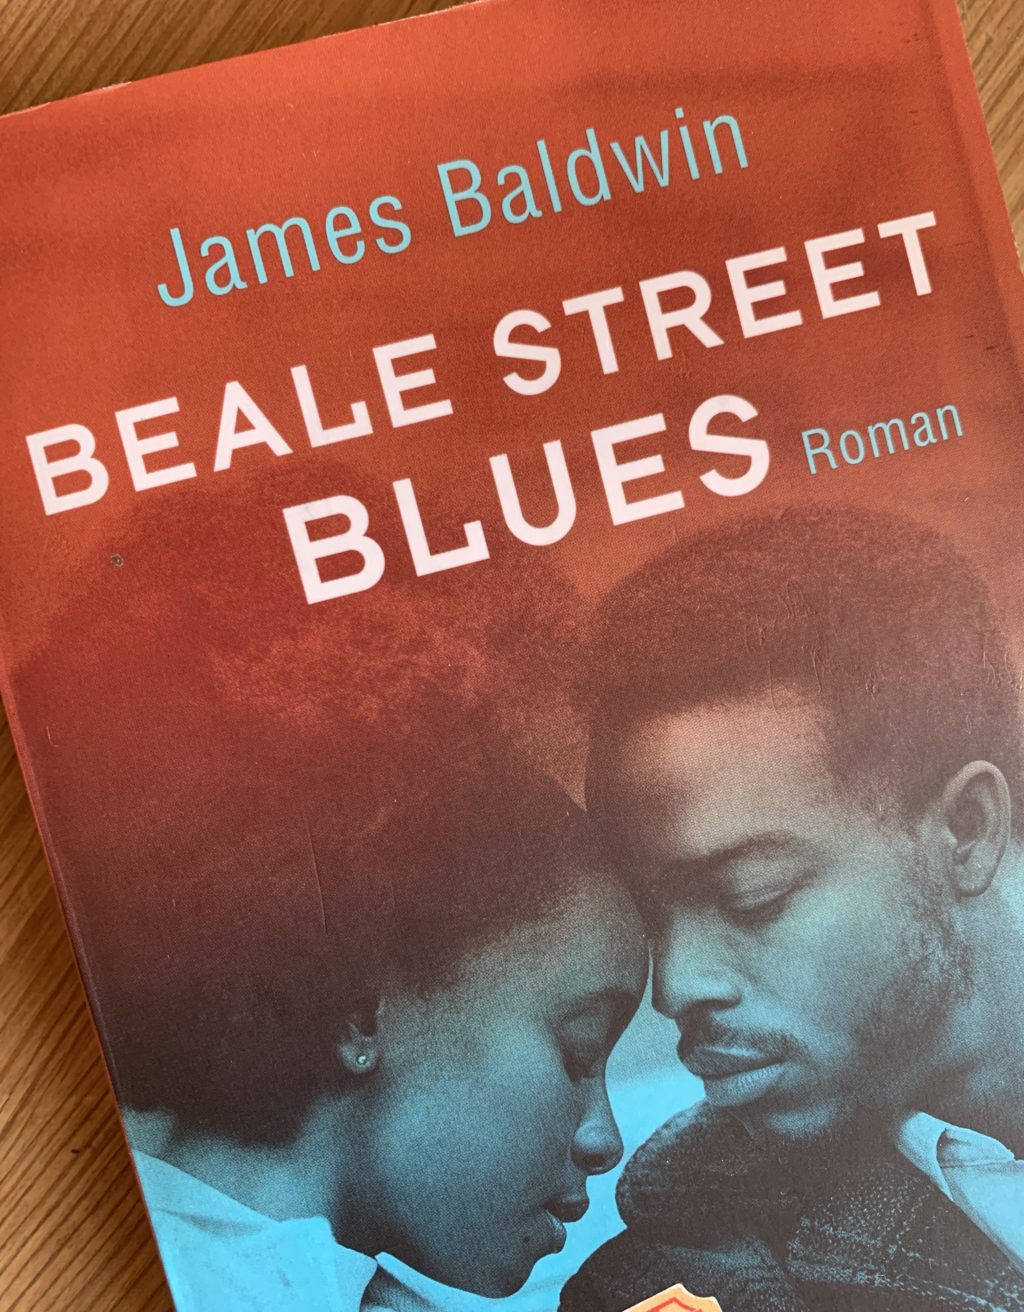 Buchcover James Baldwin "Beale Street Blues"